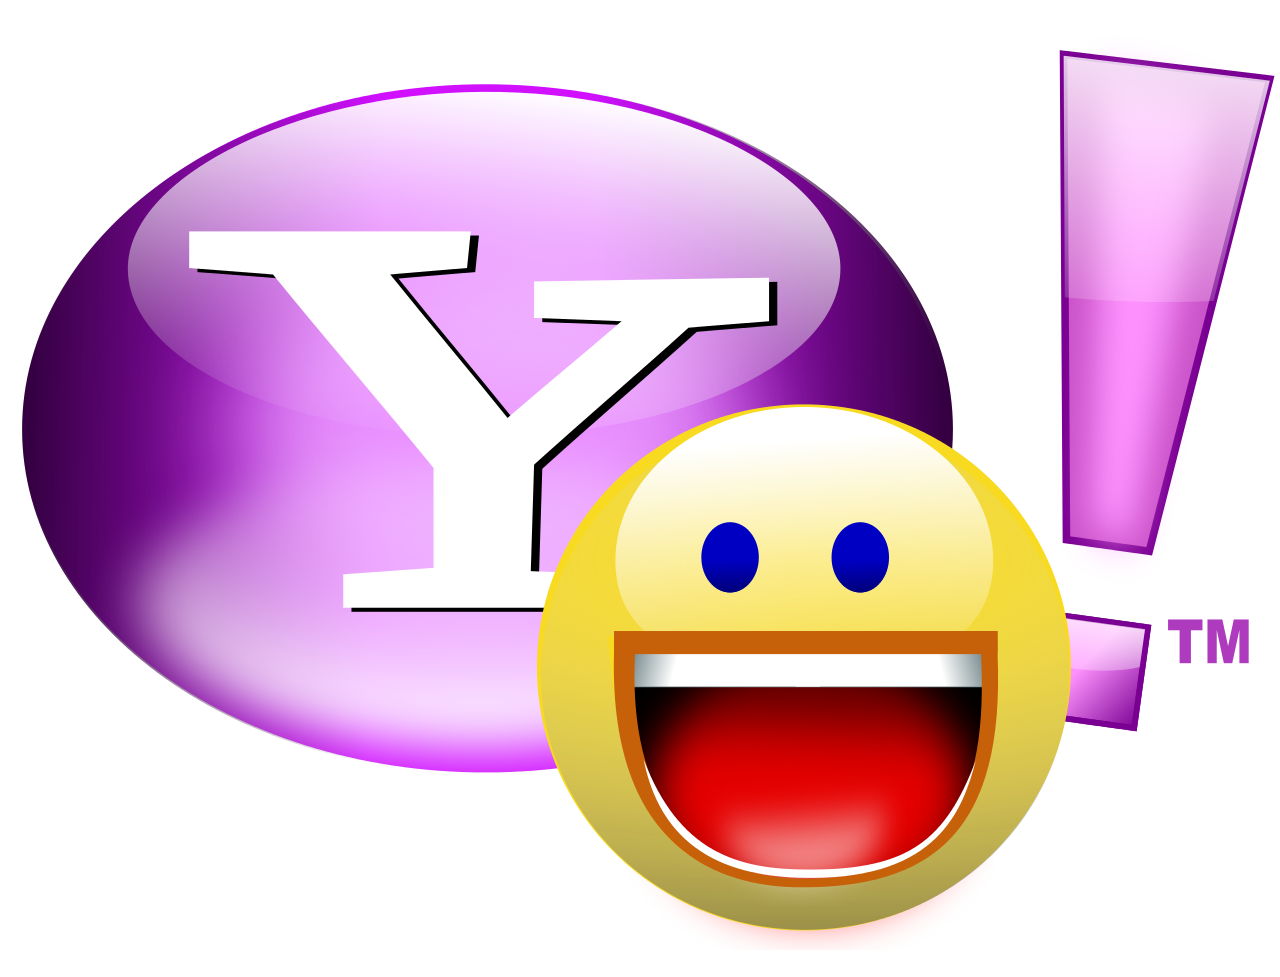 Yahoo Messenger to Shut Down | Financial Tribune